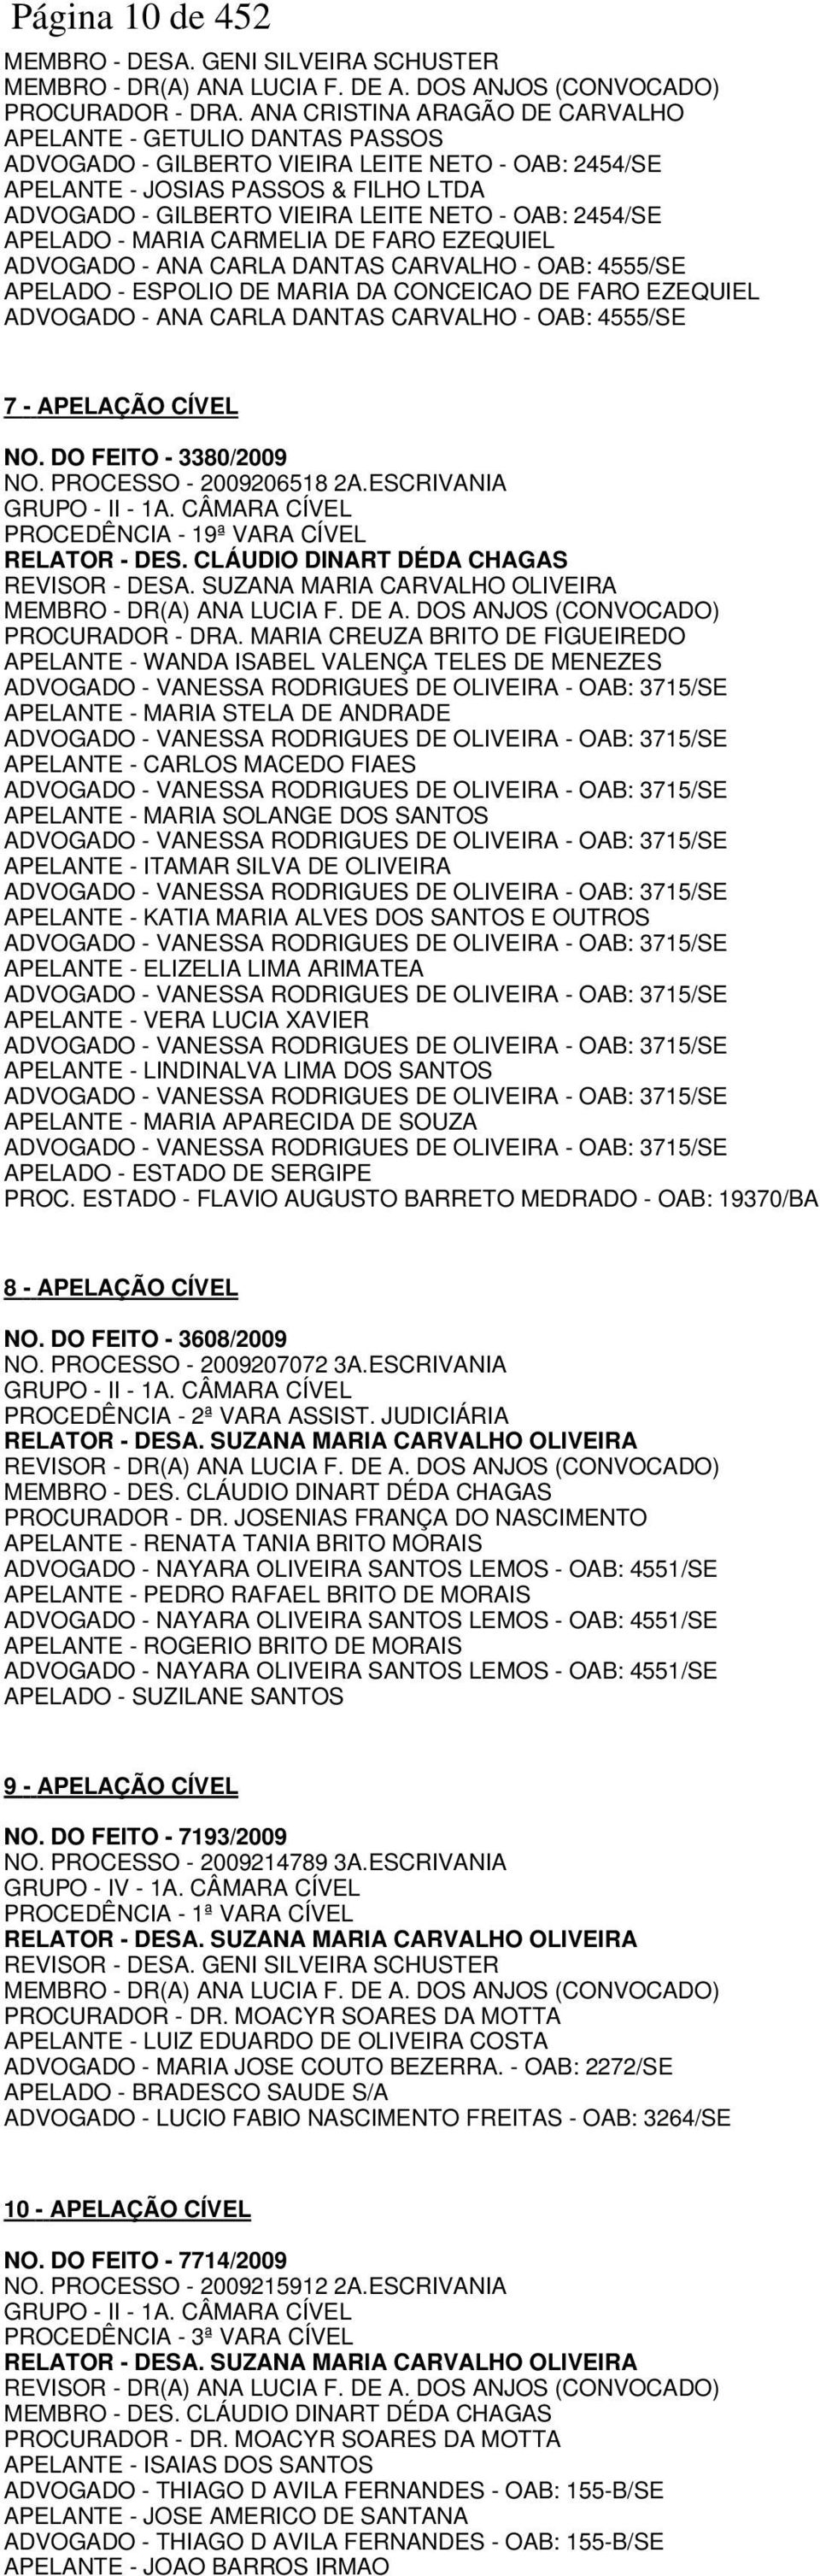 OAB: 2454/SE APELADO - MARIA CARMELIA DE FARO EZEQUIEL ADVOGADO - ANA CARLA DANTAS CARVALHO - OAB: 4555/SE APELADO - ESPOLIO DE MARIA DA CONCEICAO DE FARO EZEQUIEL ADVOGADO - ANA CARLA DANTAS